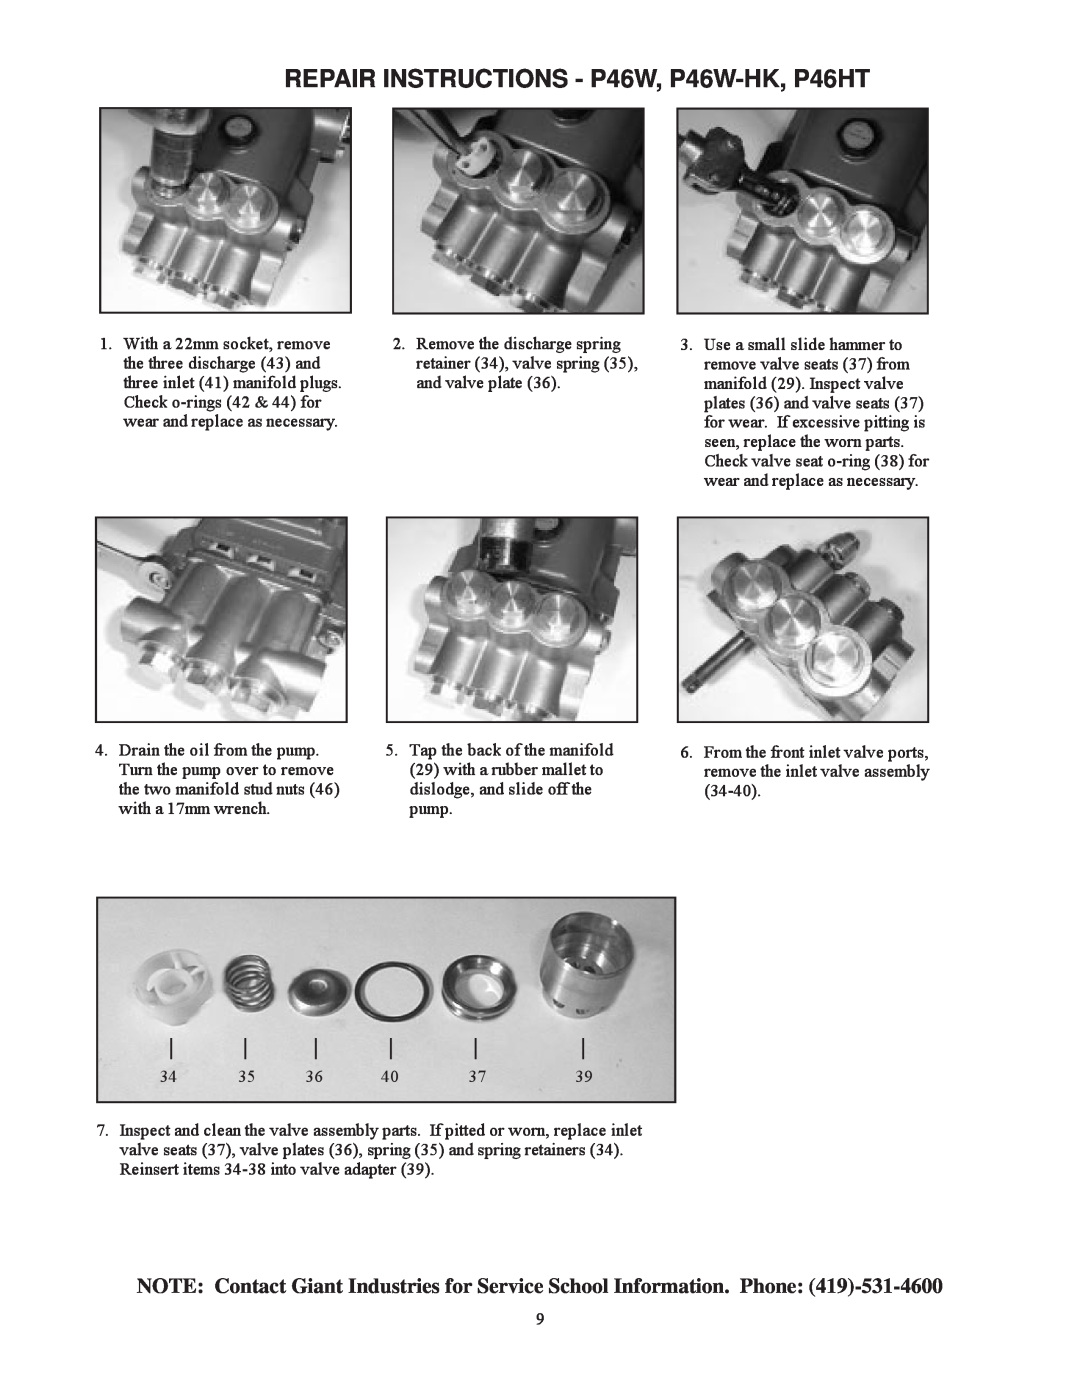 Giant Triplex Ceramic Plunger Pump installation instructions REPAIR INSTRUCTIONS - P46W, P46W-HK,P46HT 